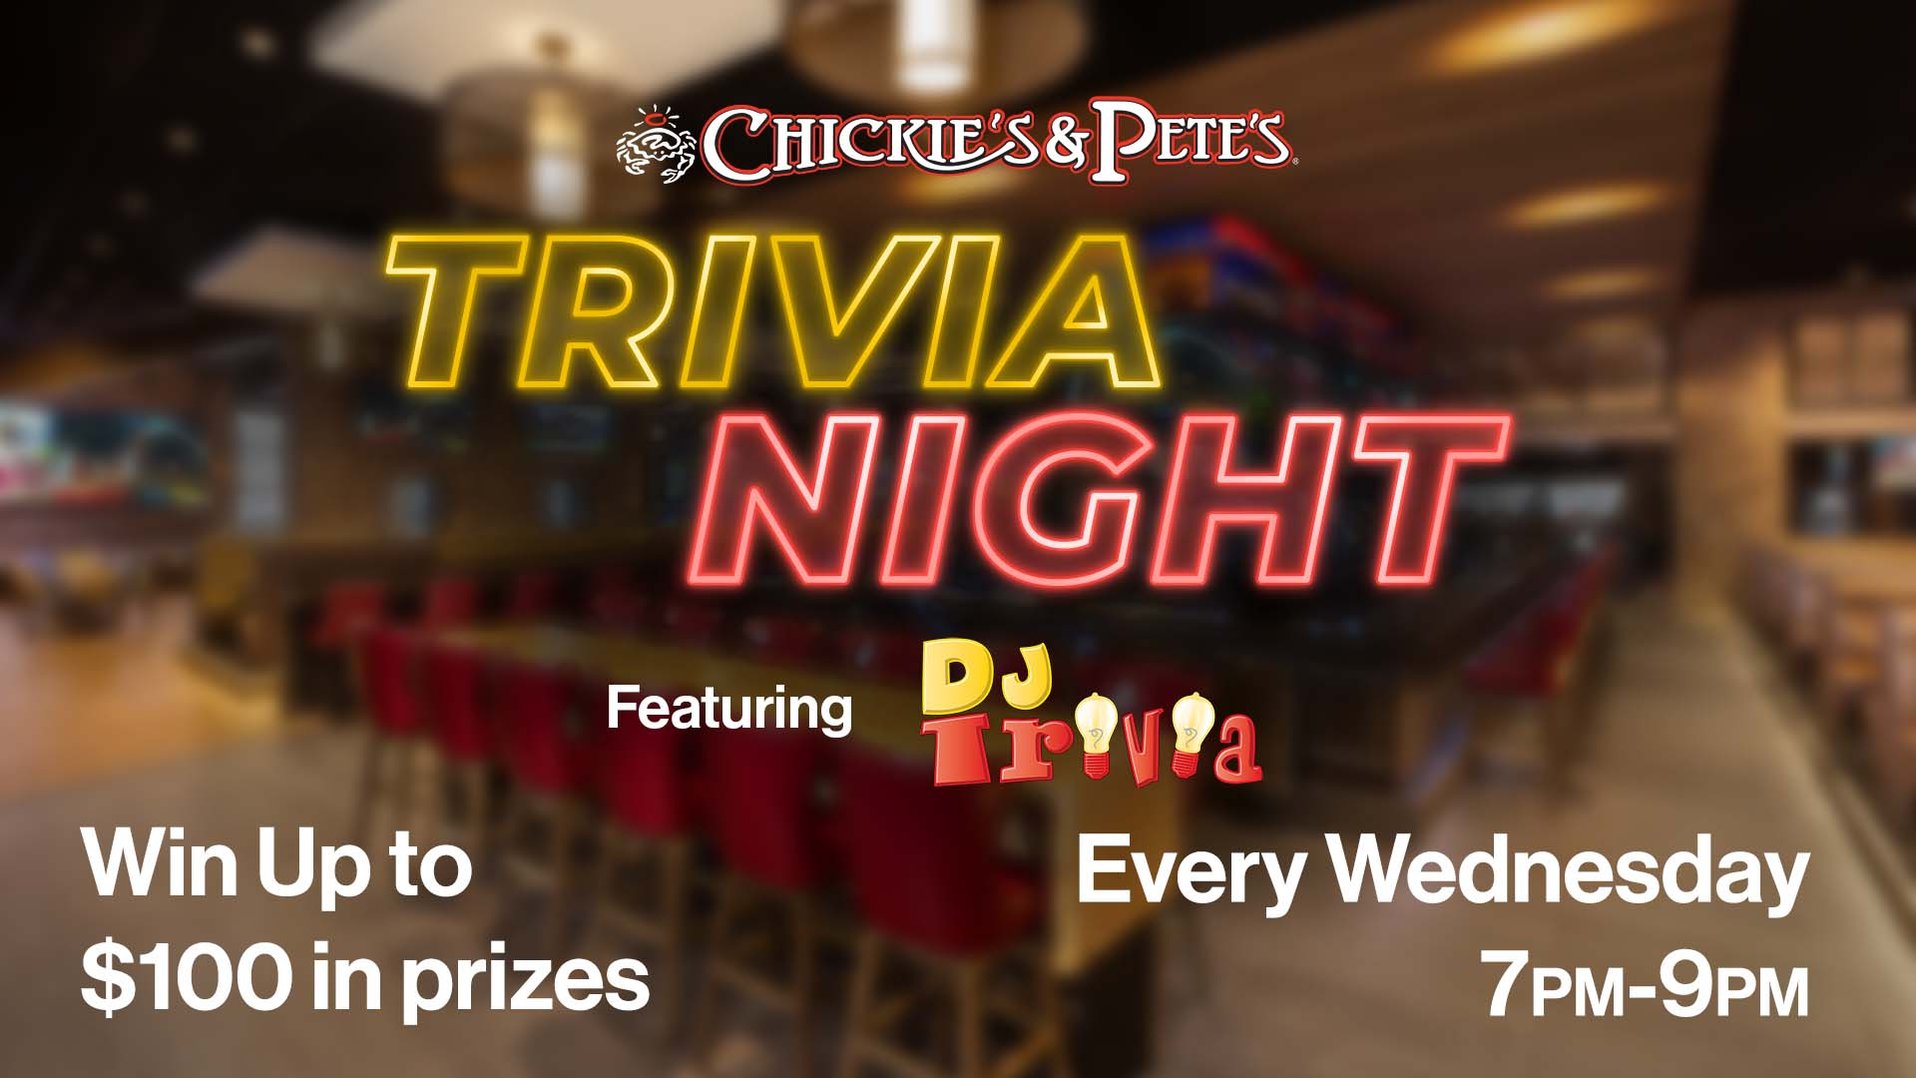 Trivia Night featuring DJ Trivia every Wednesday